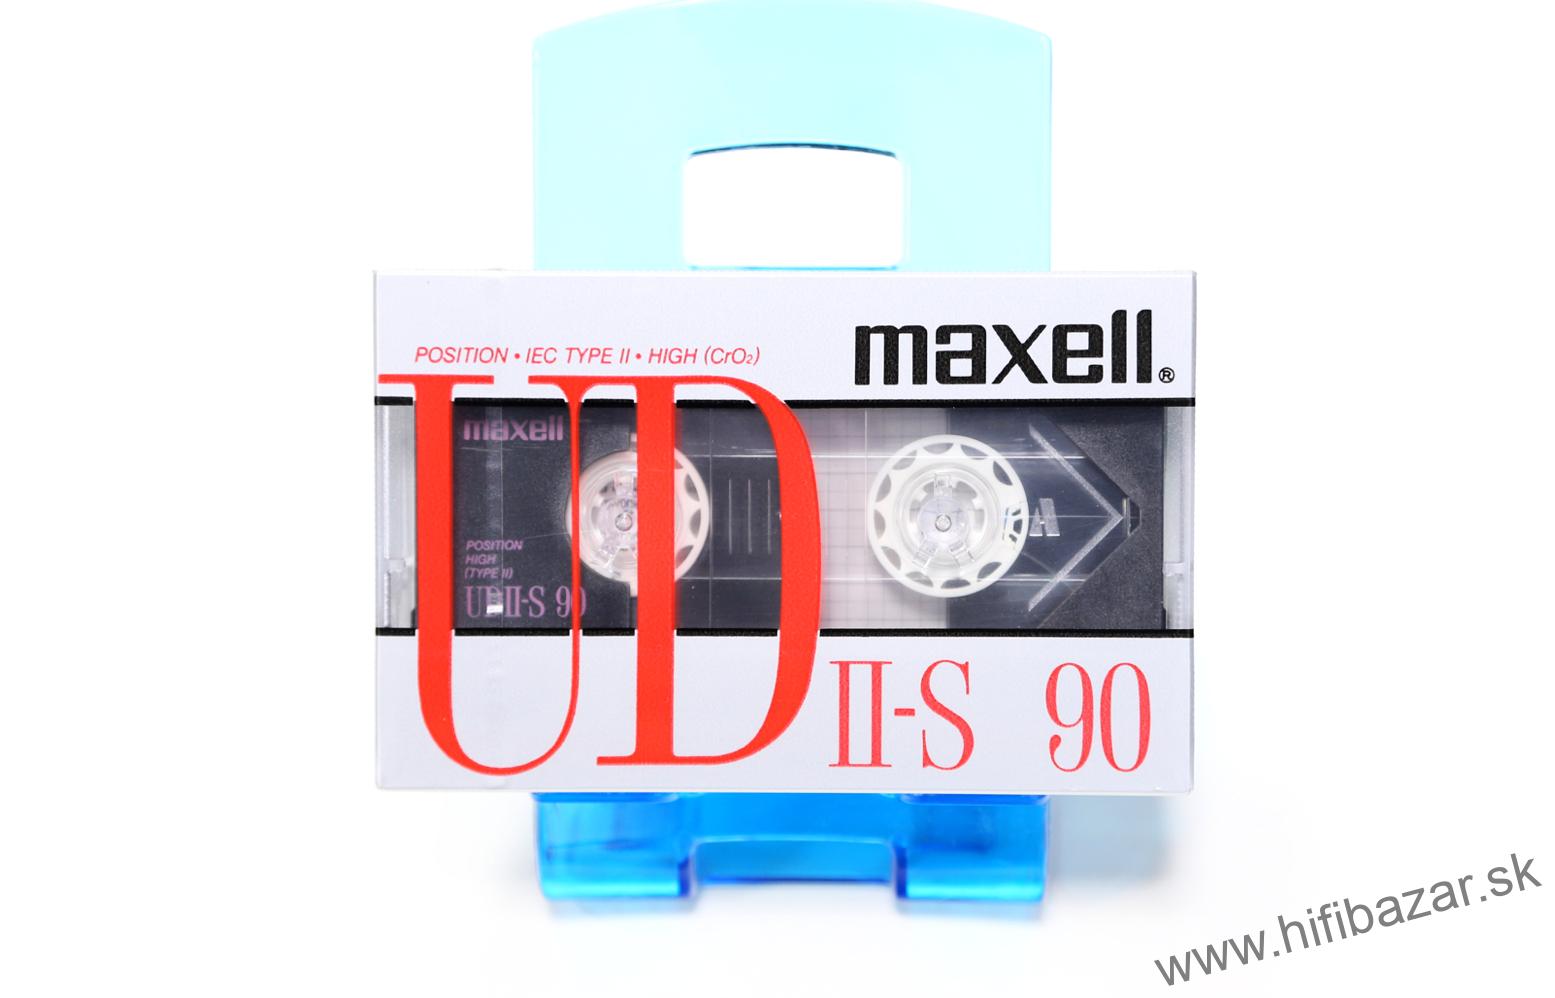 MAXELL UDII-S90 Position Chrome